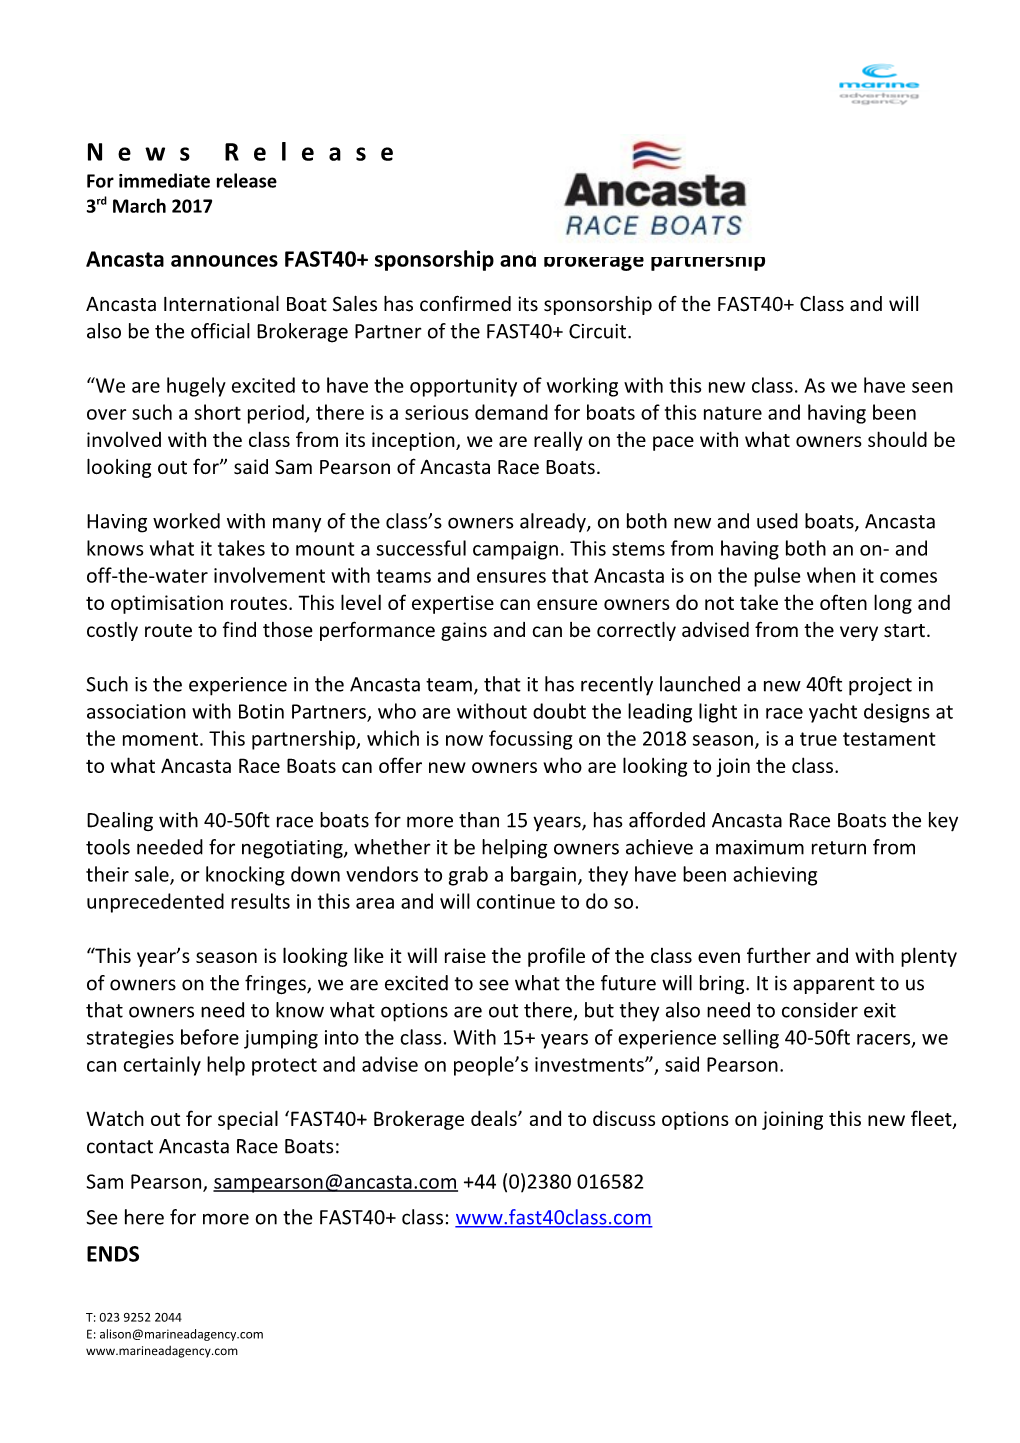 Ancasta Announces FAST40+ Sponsorship and Brokerage Partnership